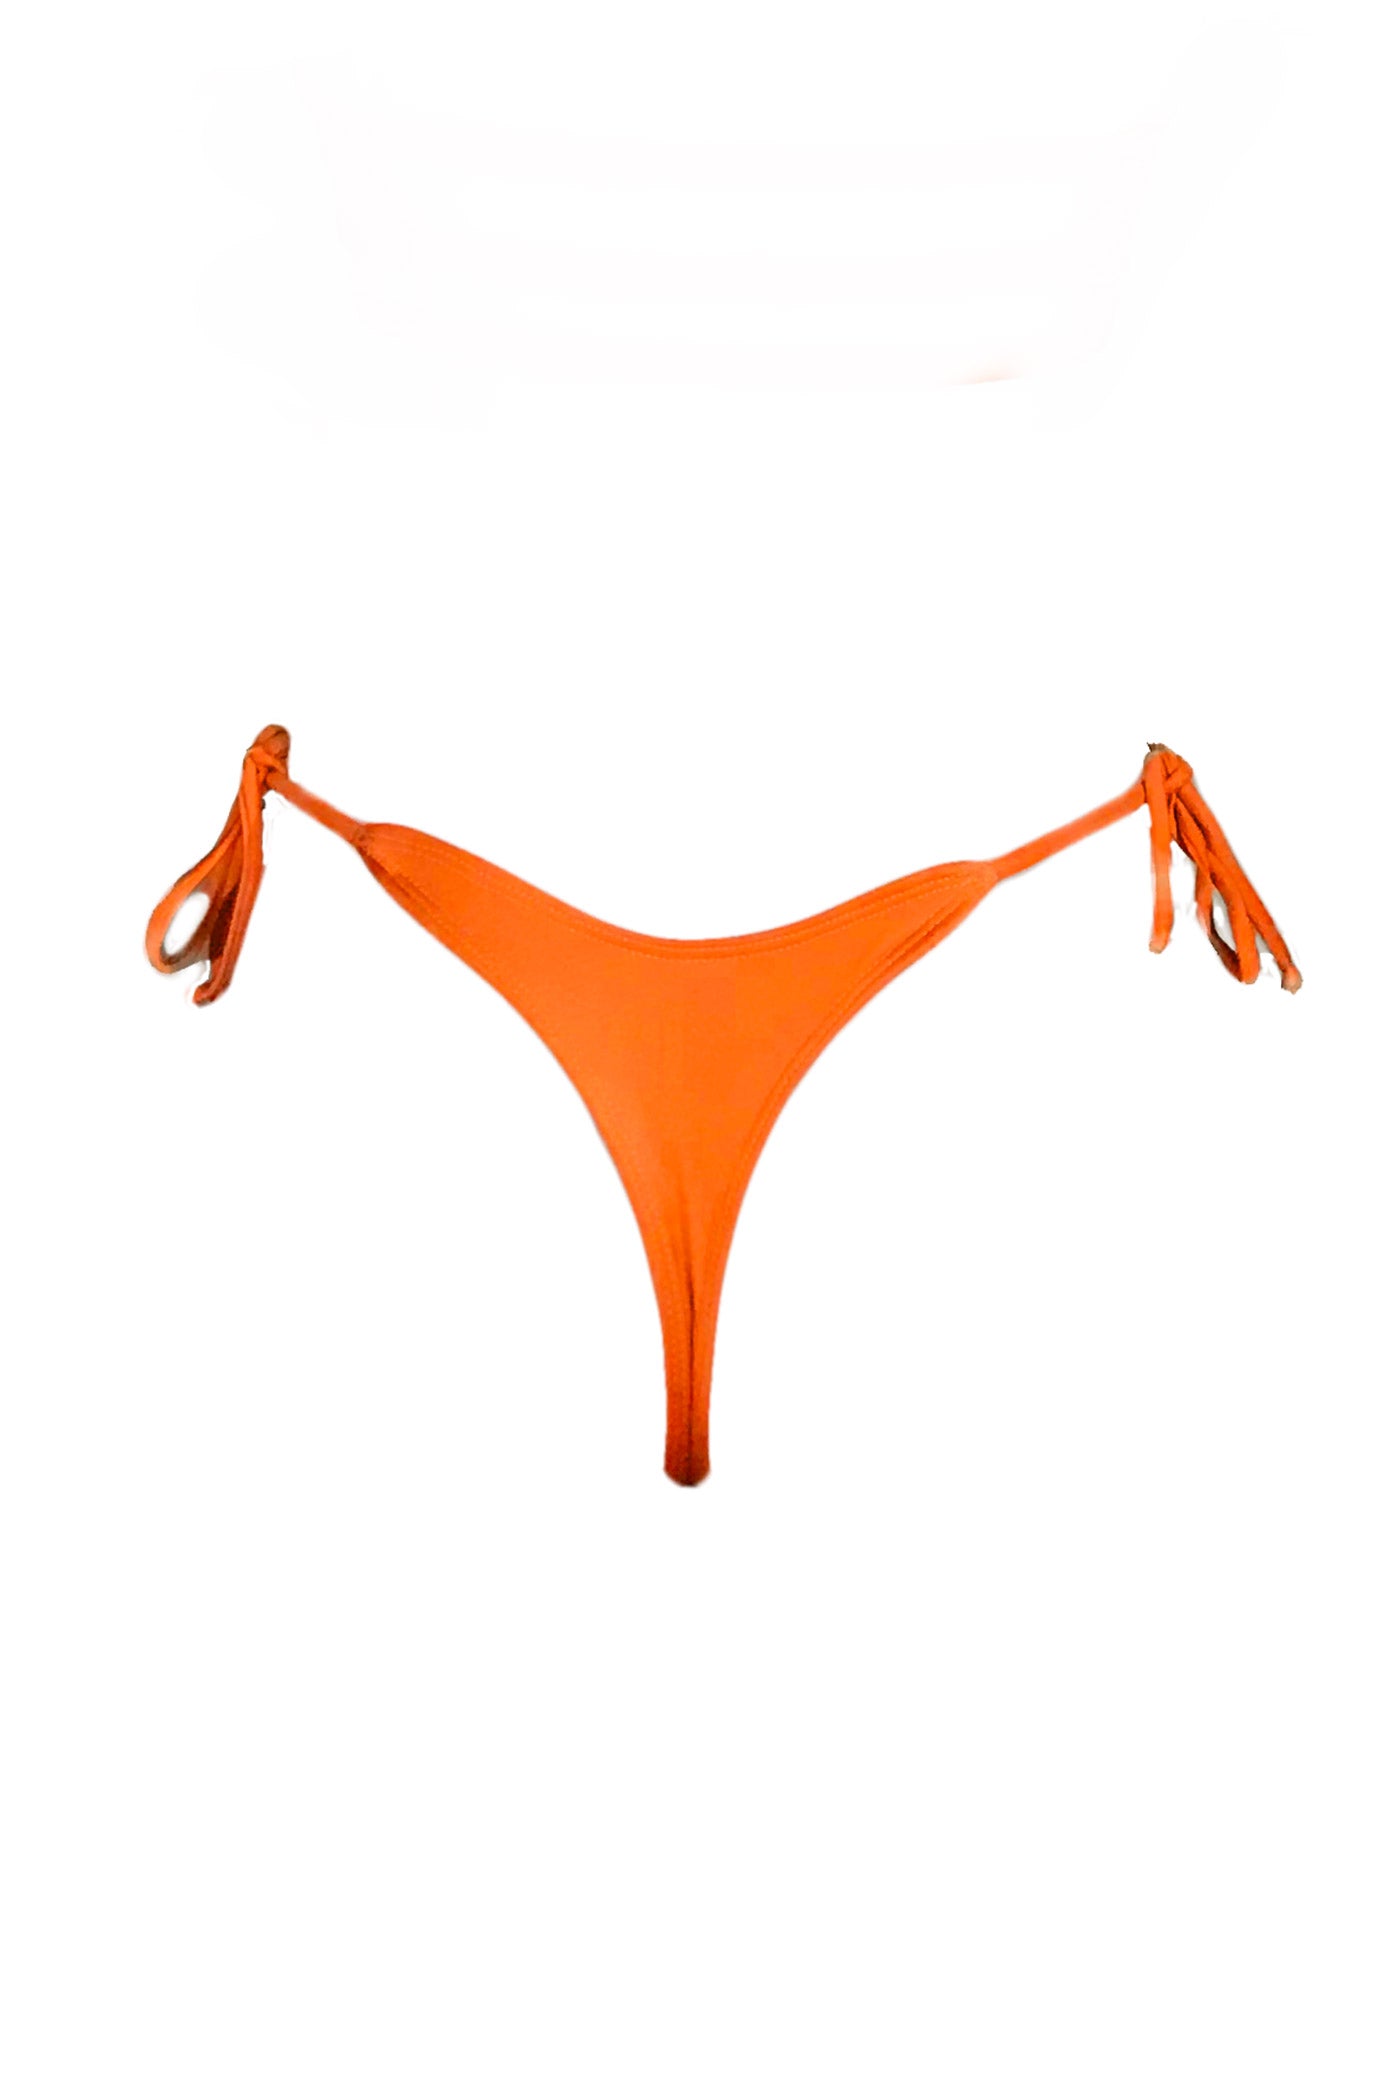 Burnt Orange // High Hip side tie Thong